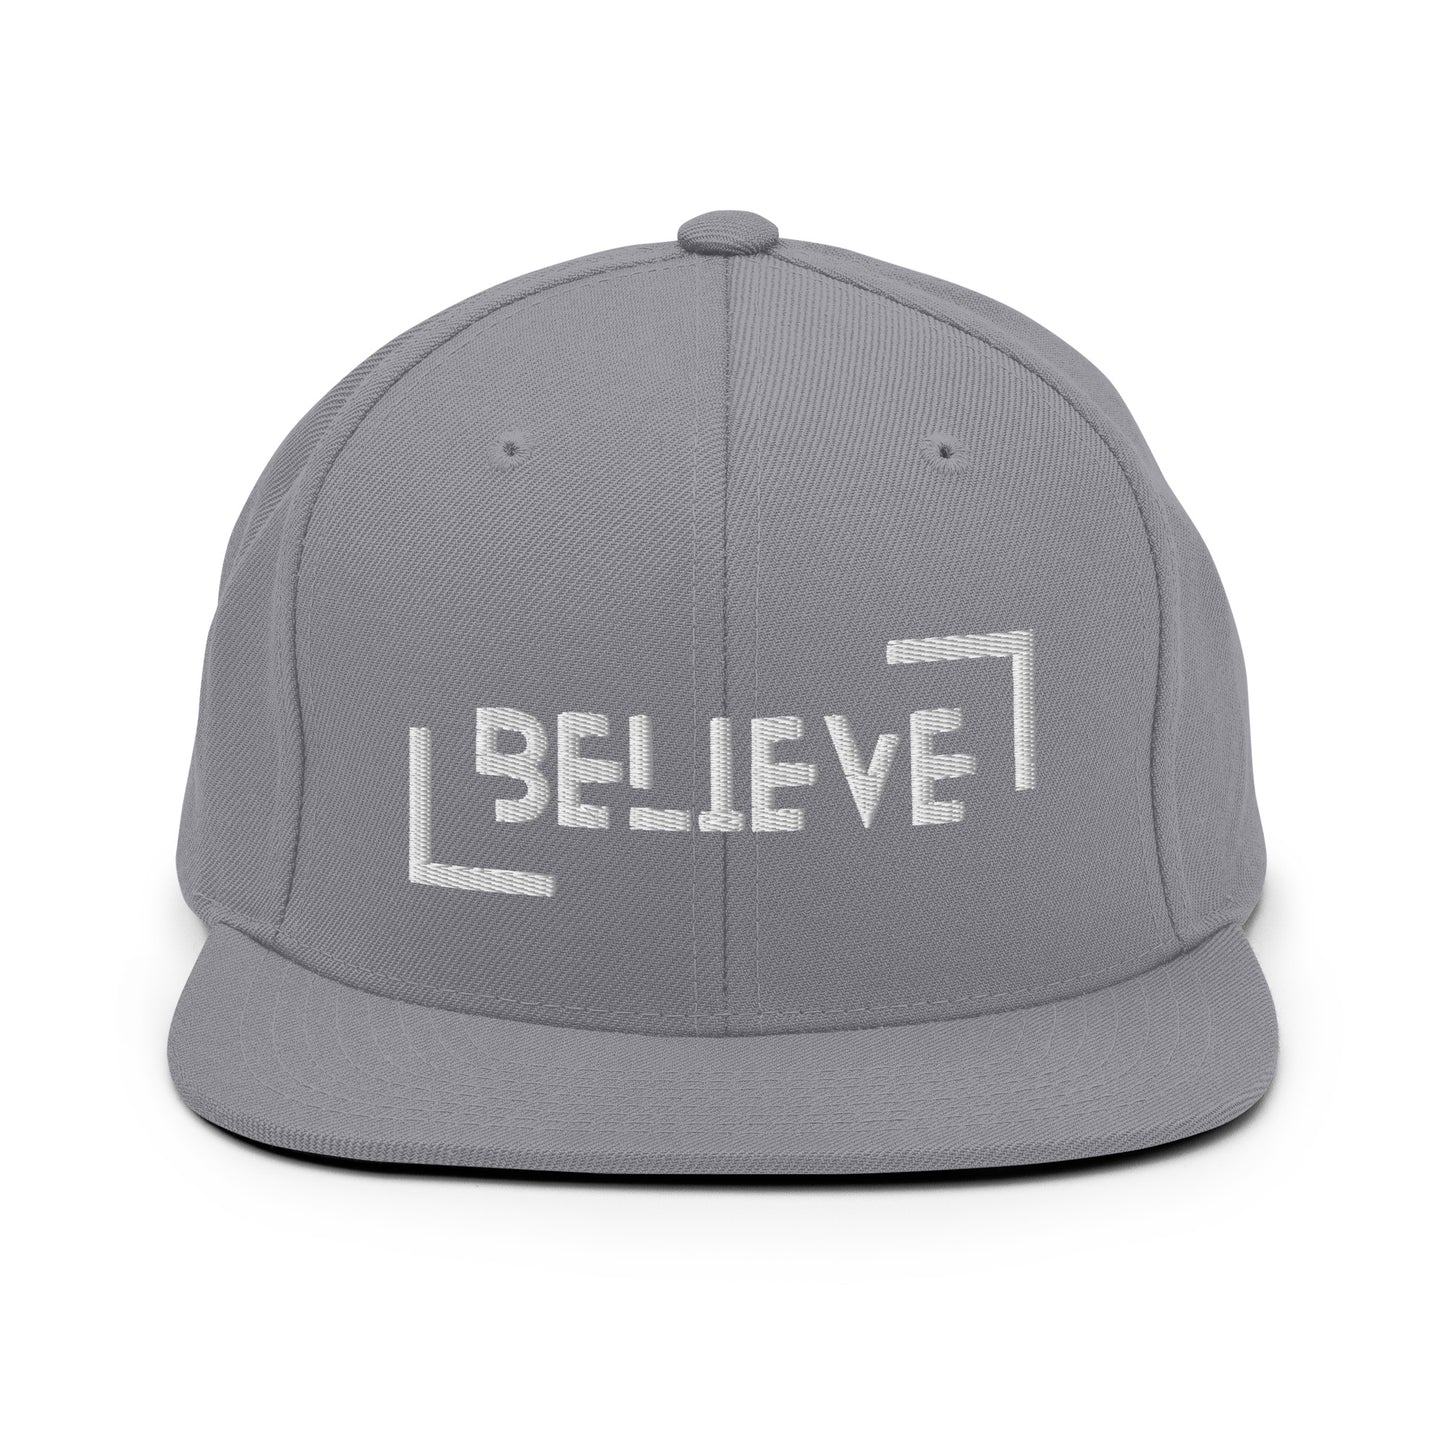 BELIEVE Snapback Hat